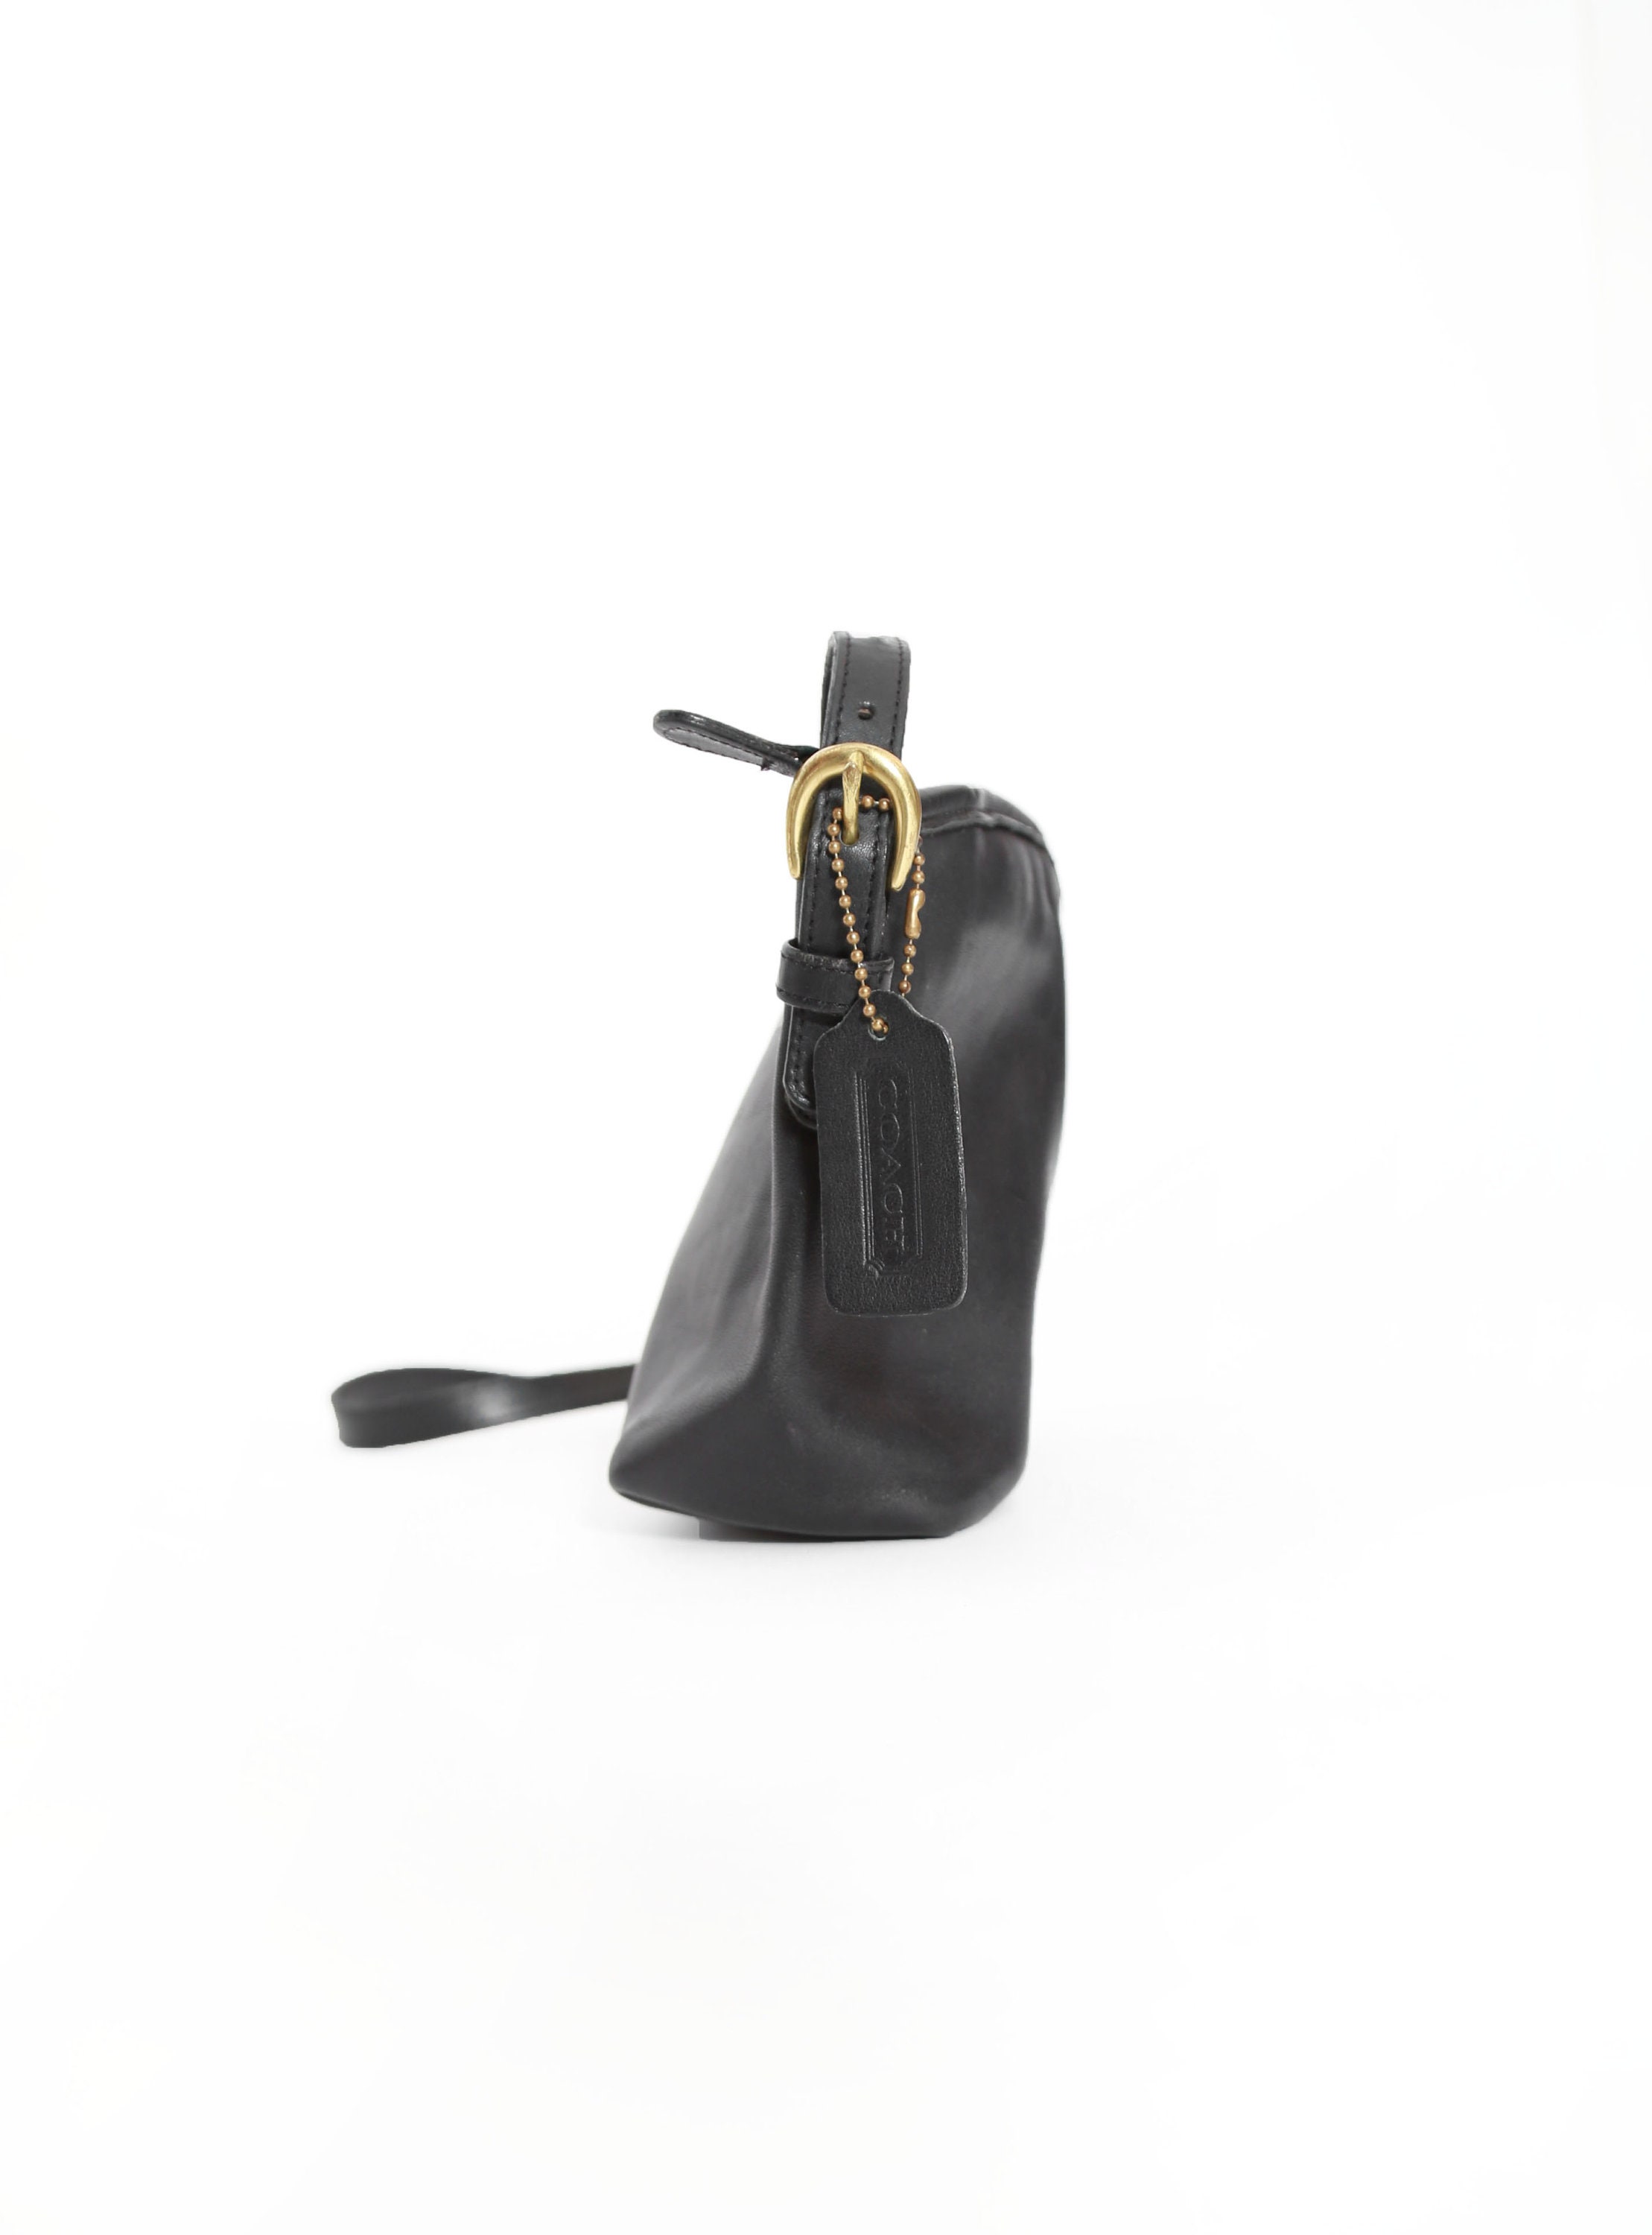 Vintage COACH Black leather crossbody purse | Etsy